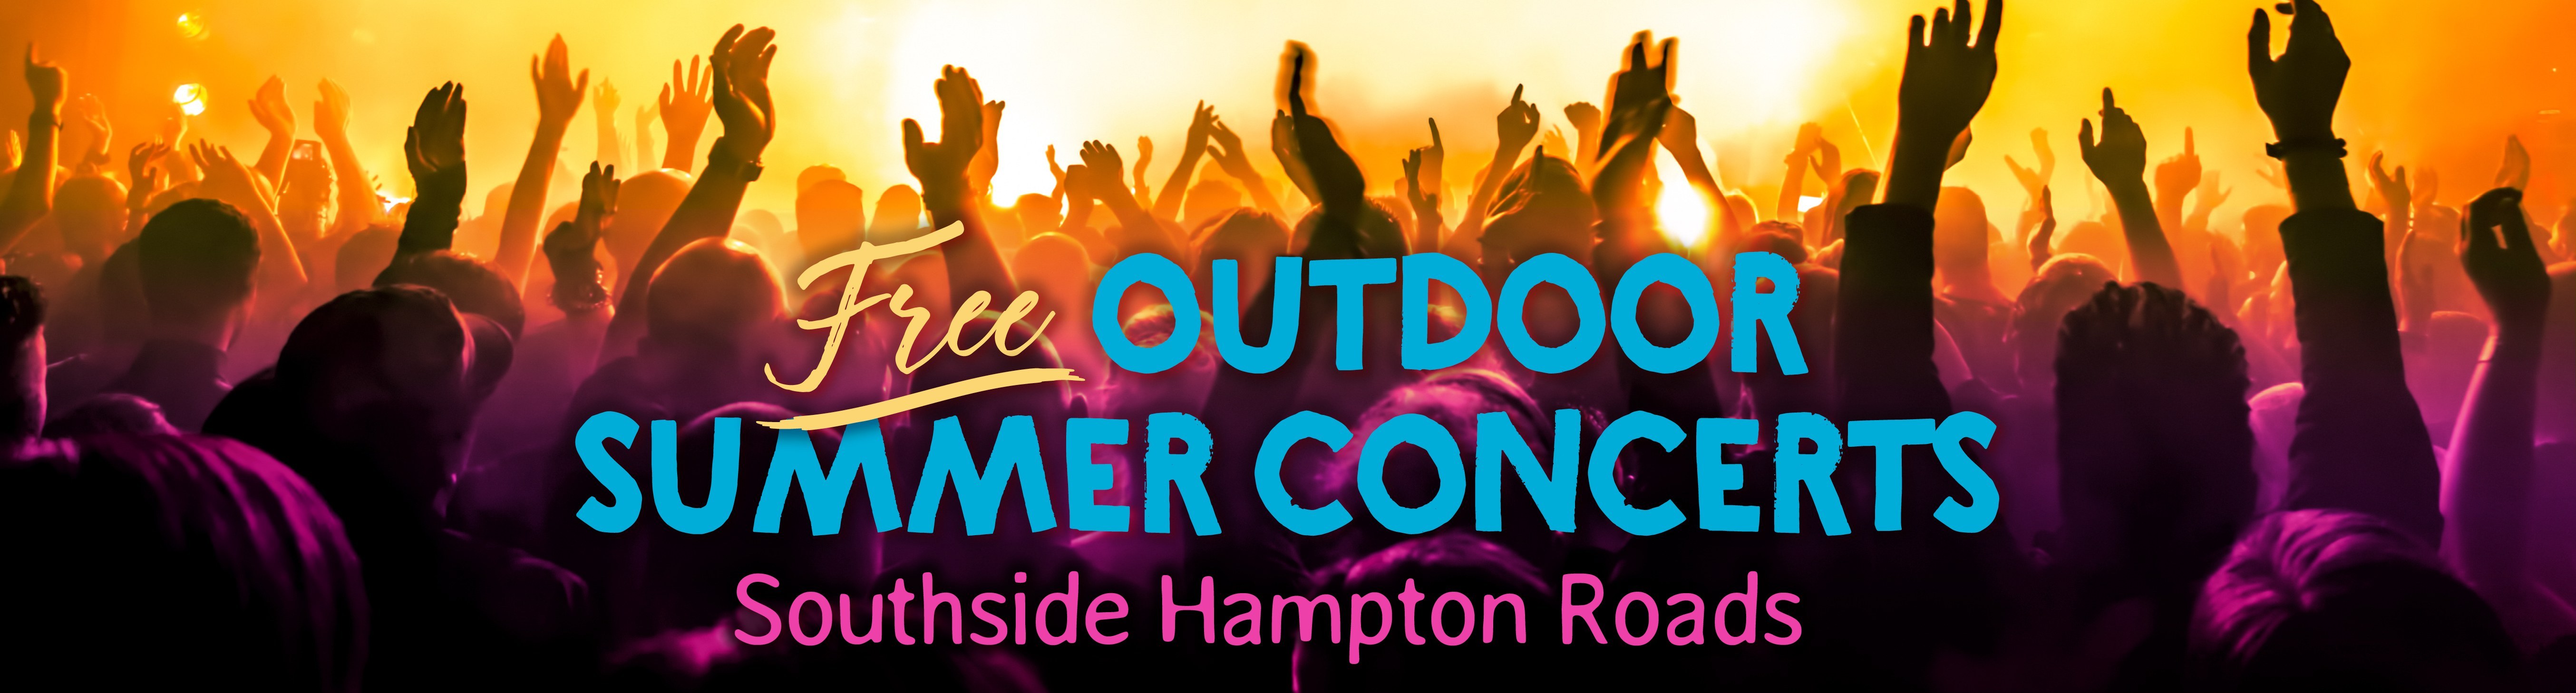 2018 Free Outdoor Summer Concerts Southside Hampton Roads